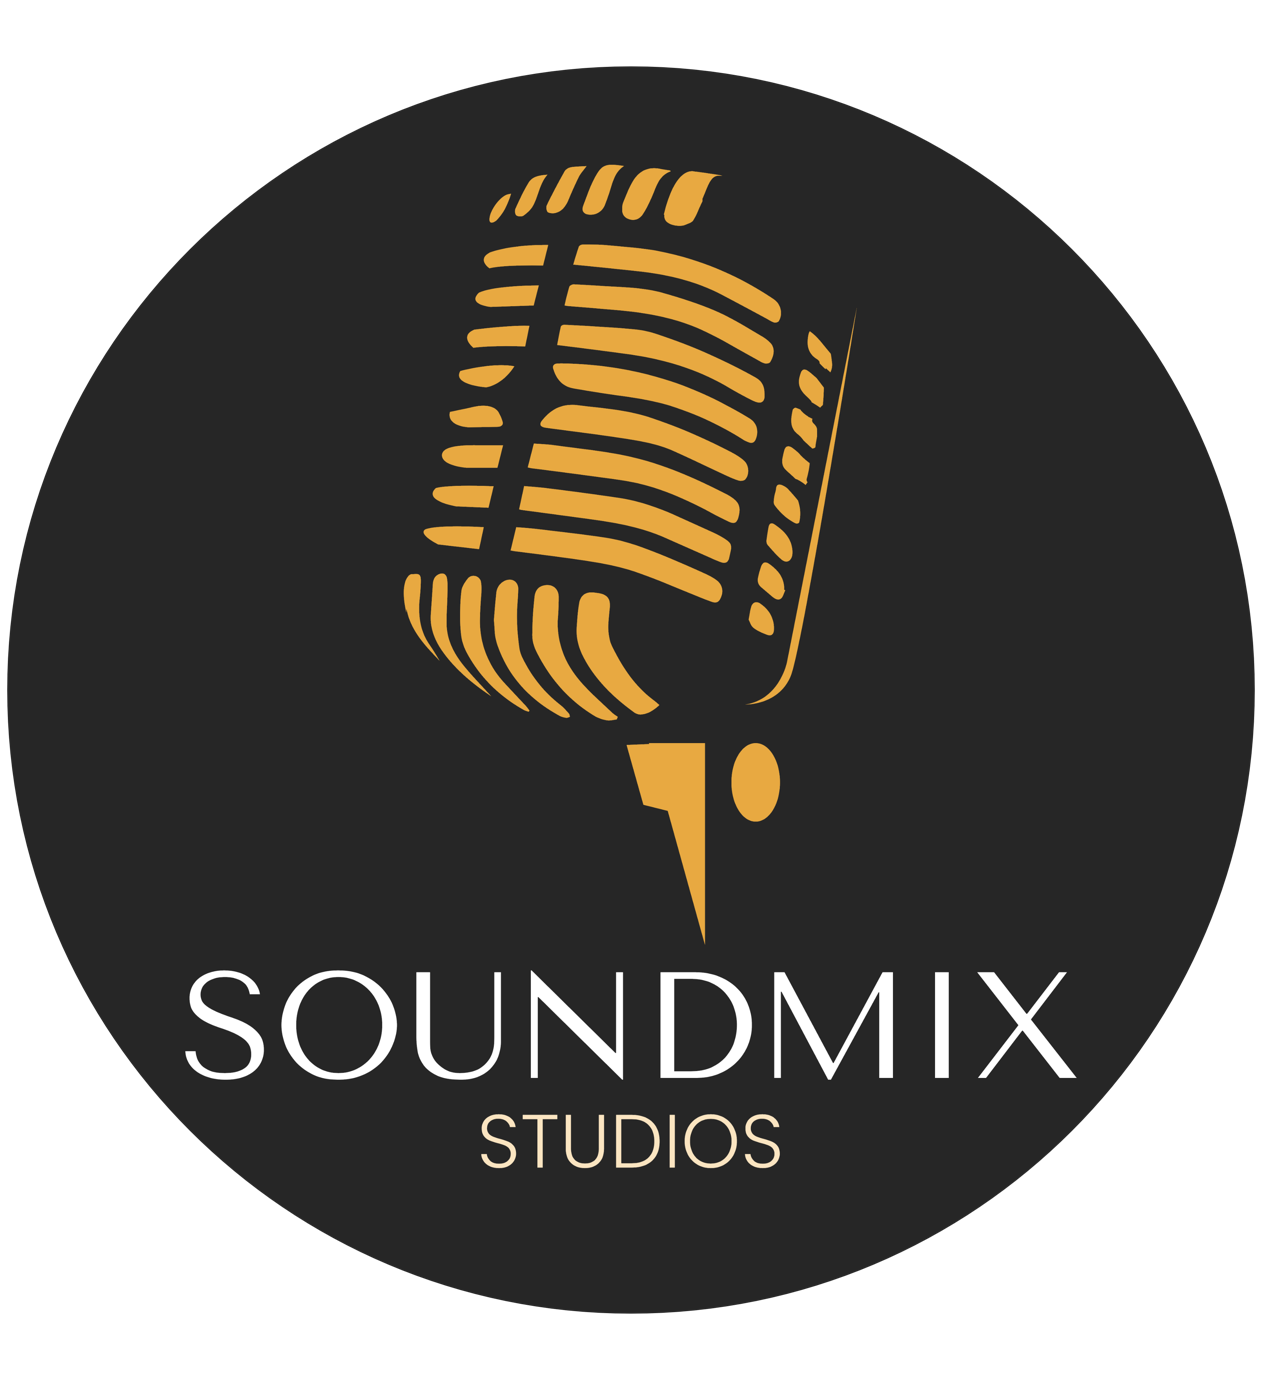 official website SoundMix Studios